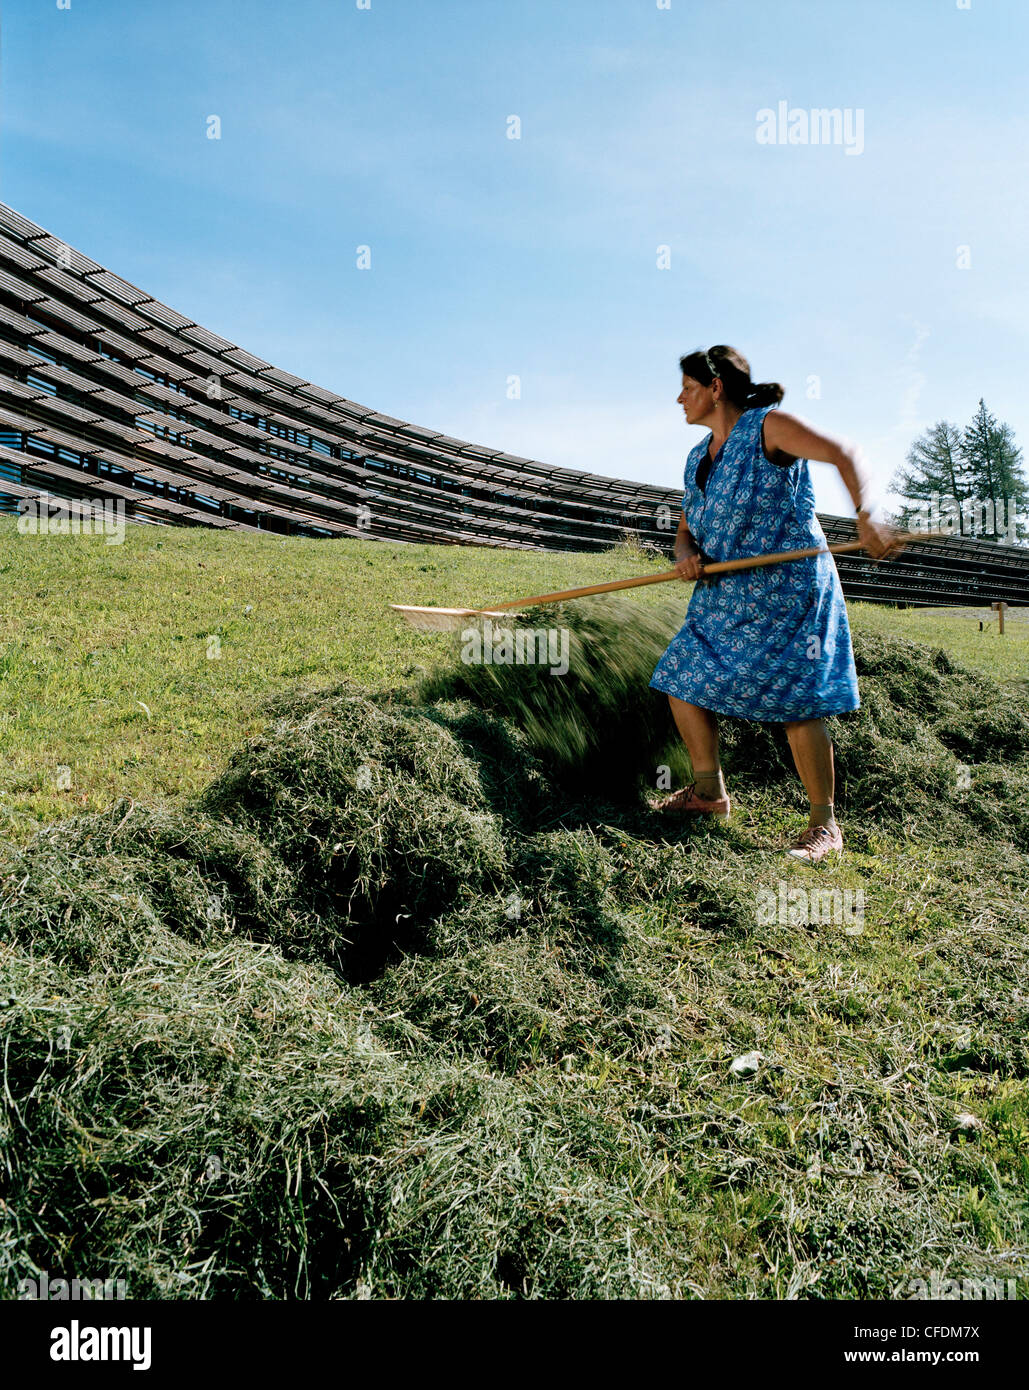 Woman raking hay near Vigilius Mountain Resort, Vigiljoch, Lana, Trentino-Alto Adige/Suedtirol, Italy Stock Photo